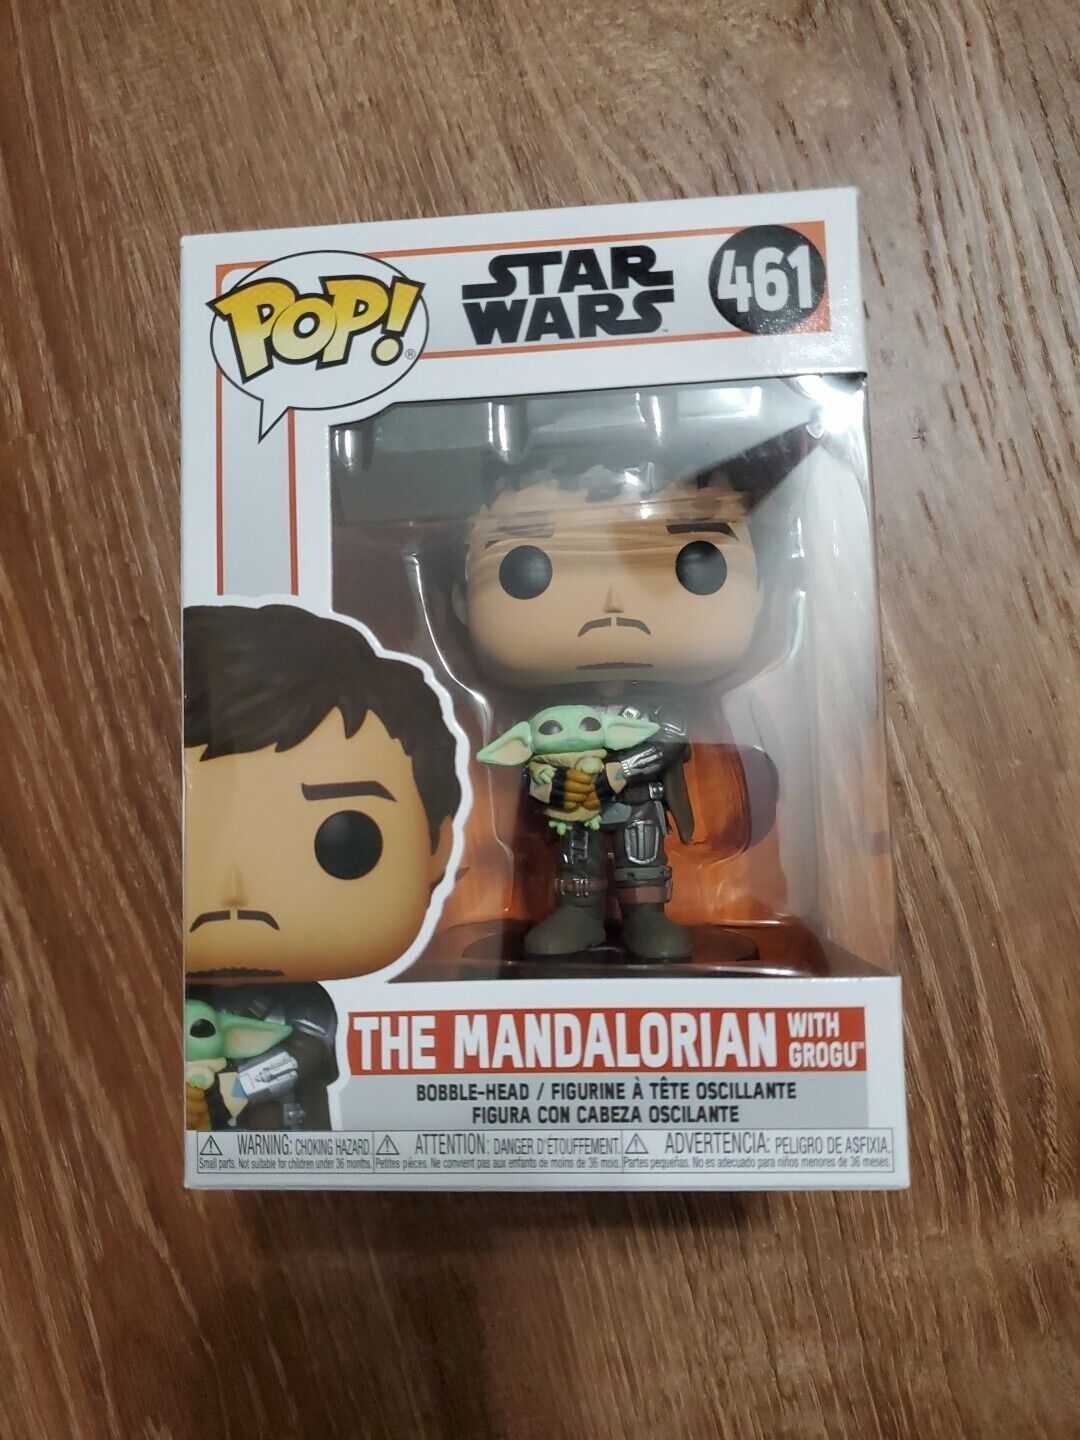 POP Star Wars 461 The Mandalorian with Grogu 